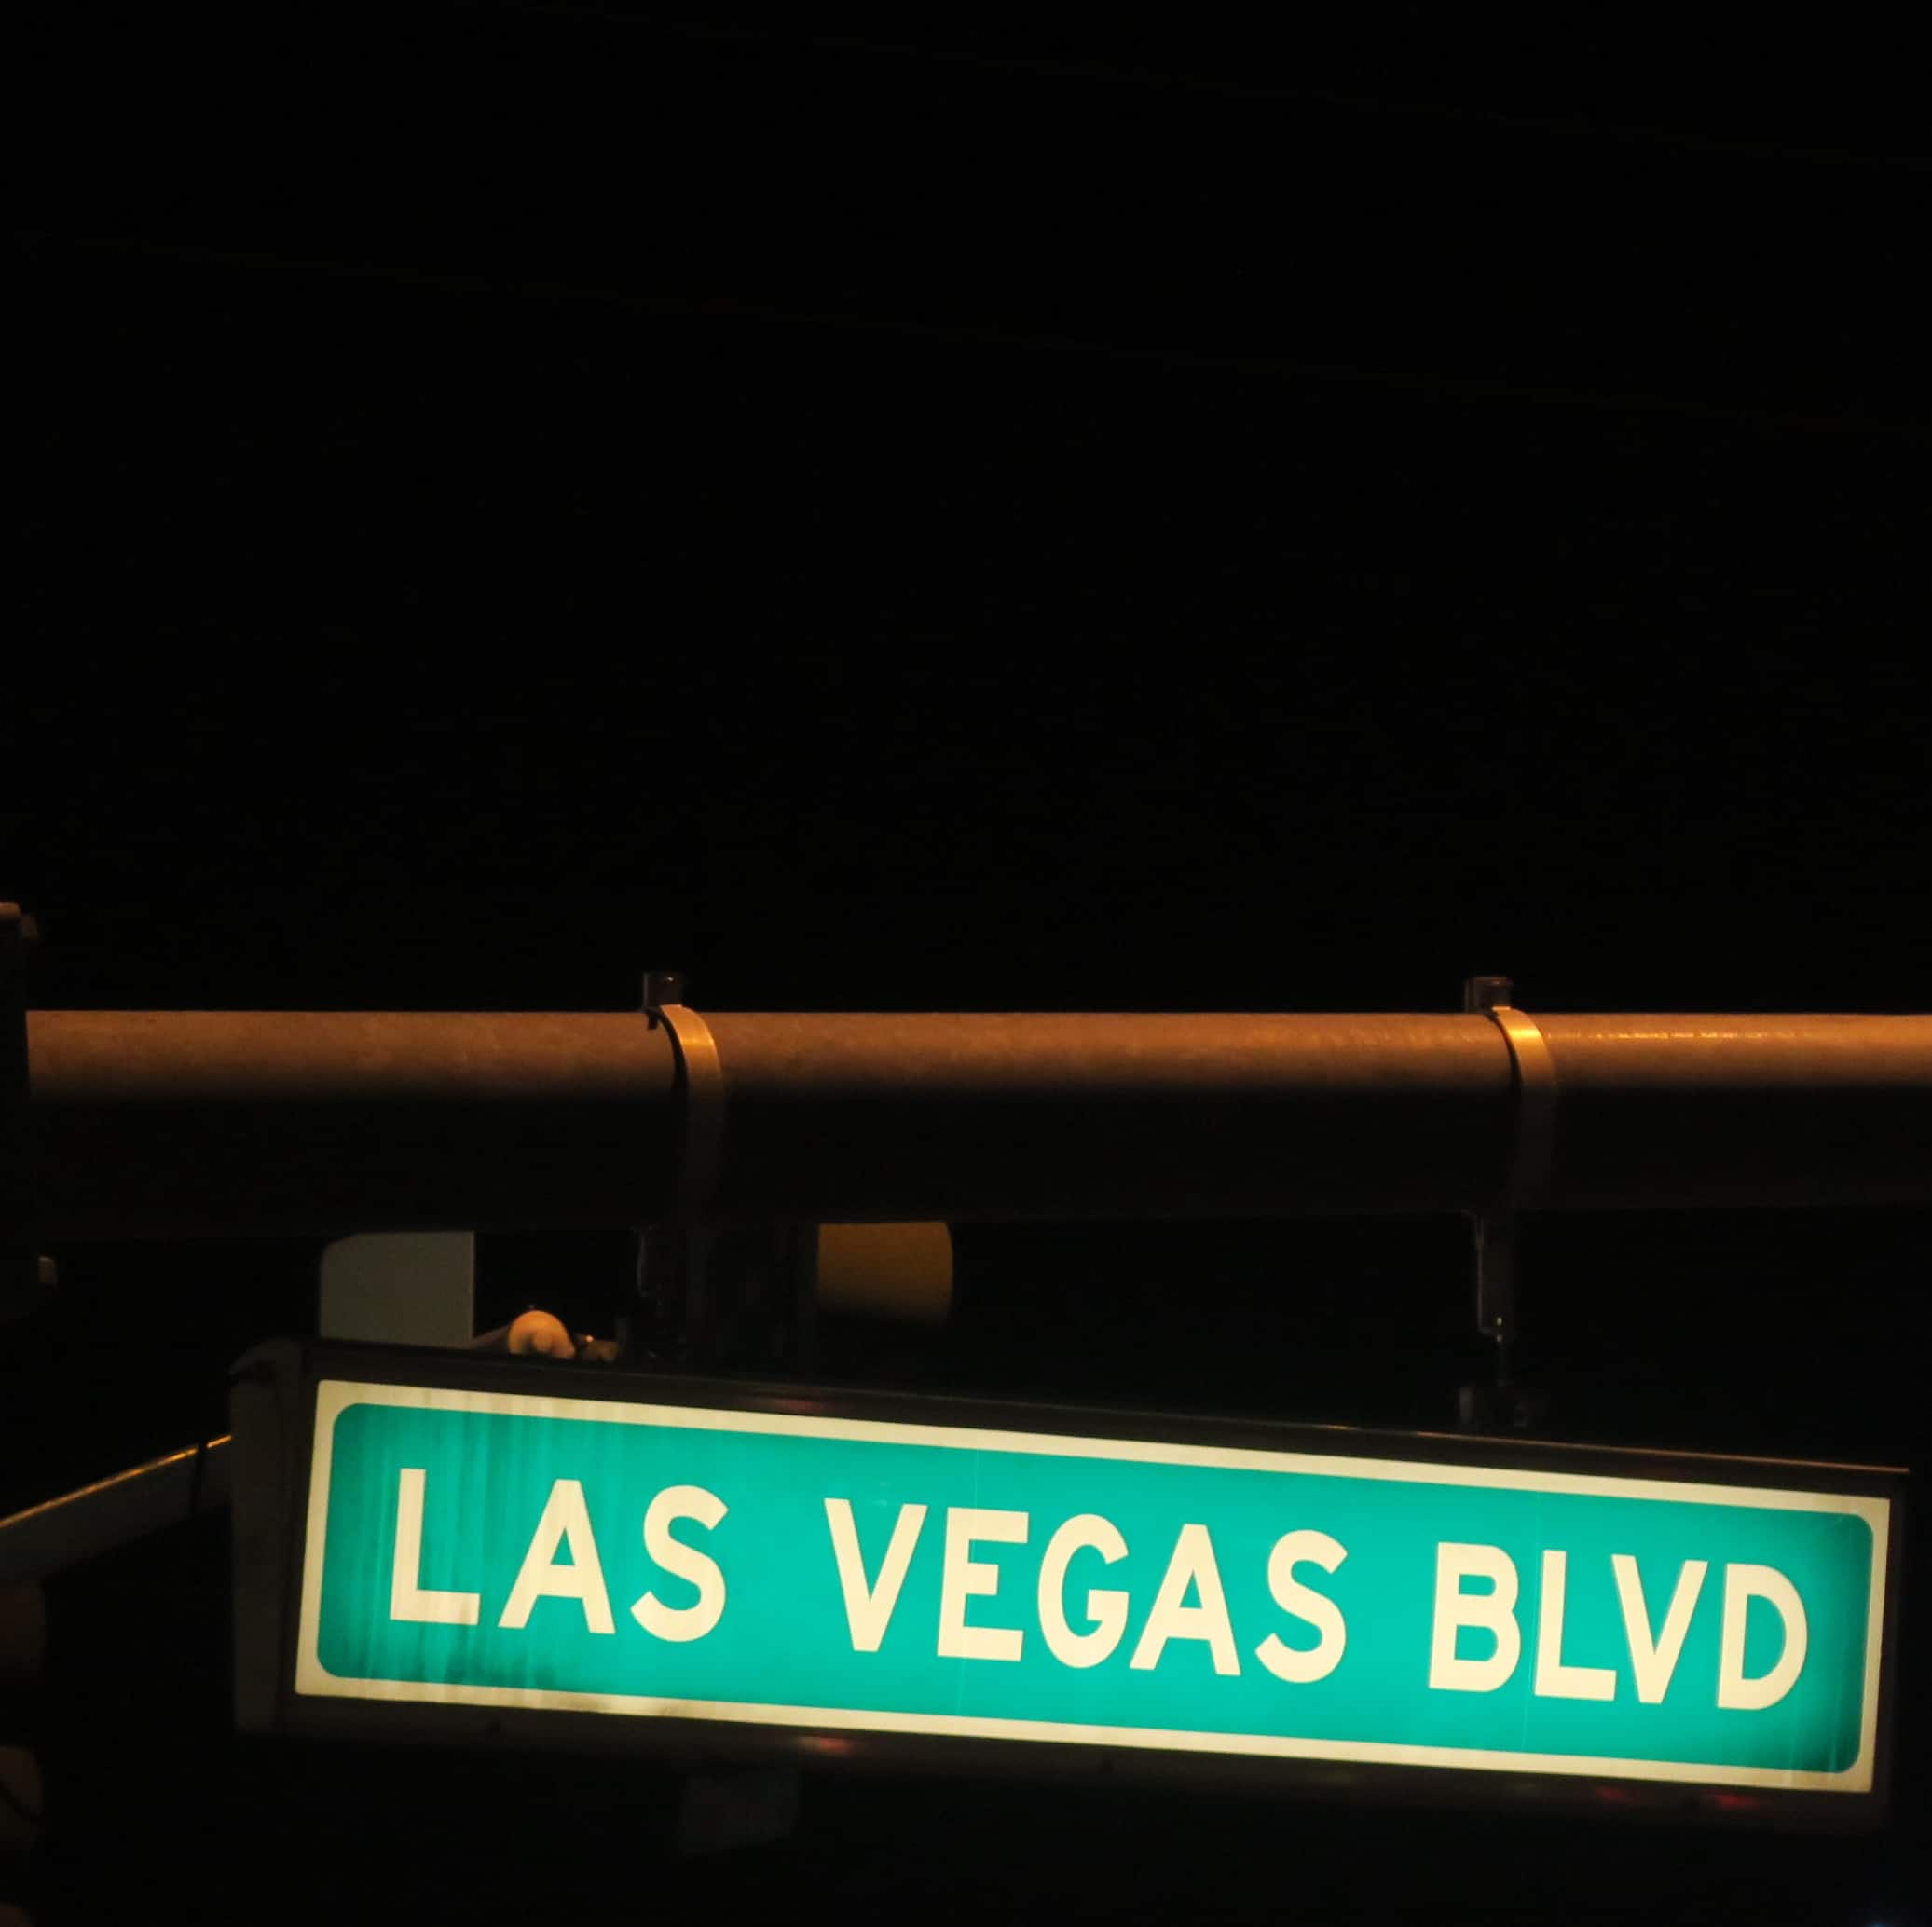 Las Vegas Boulevard AKA The Strip